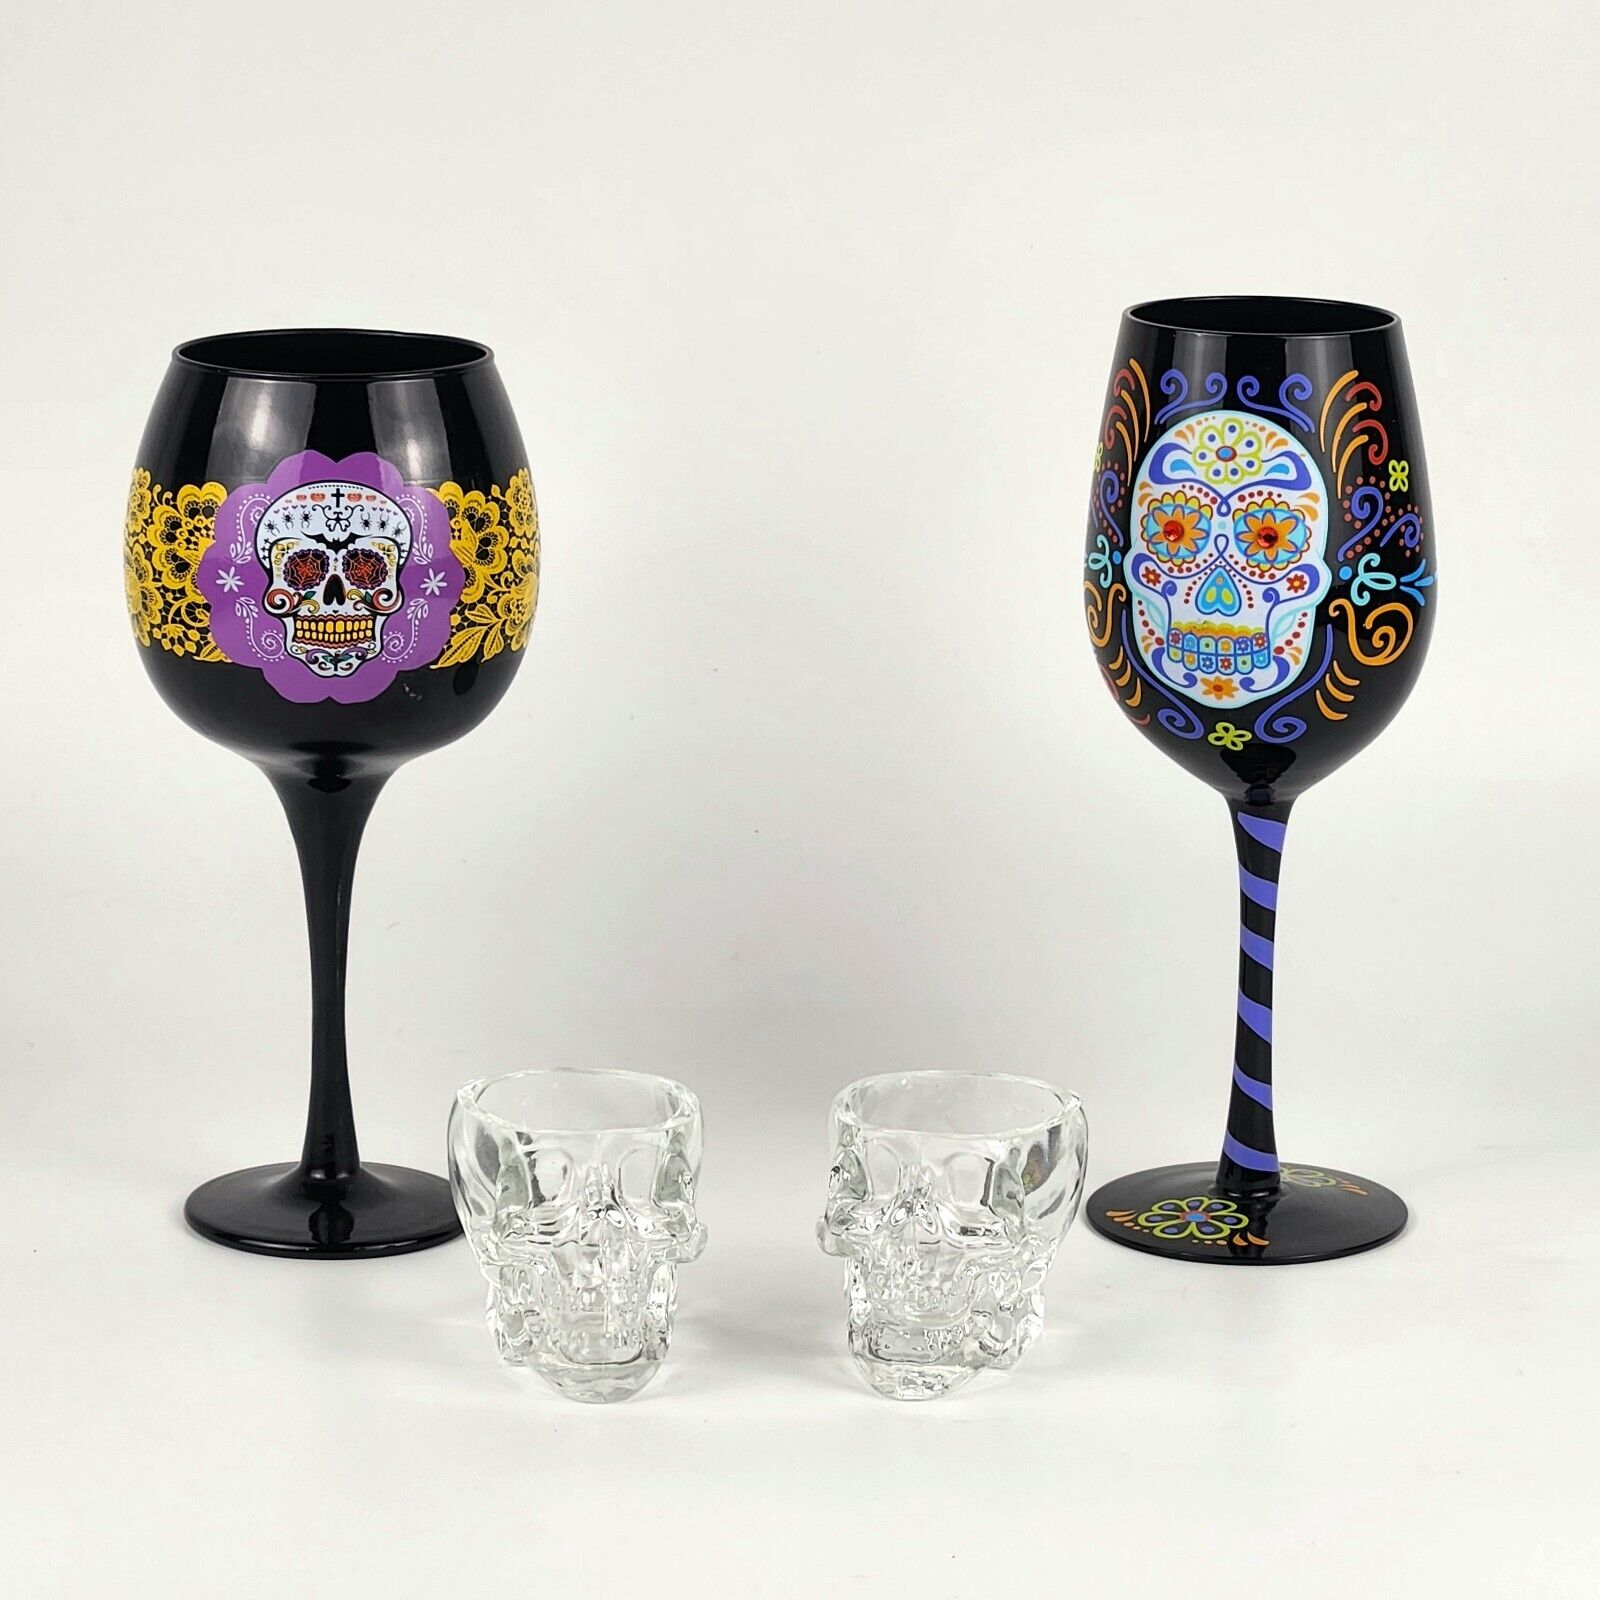 Sugar Skull Lot - 2 Goblets and 2 Skull Shaped Shot Glasses - Unique and Stylish